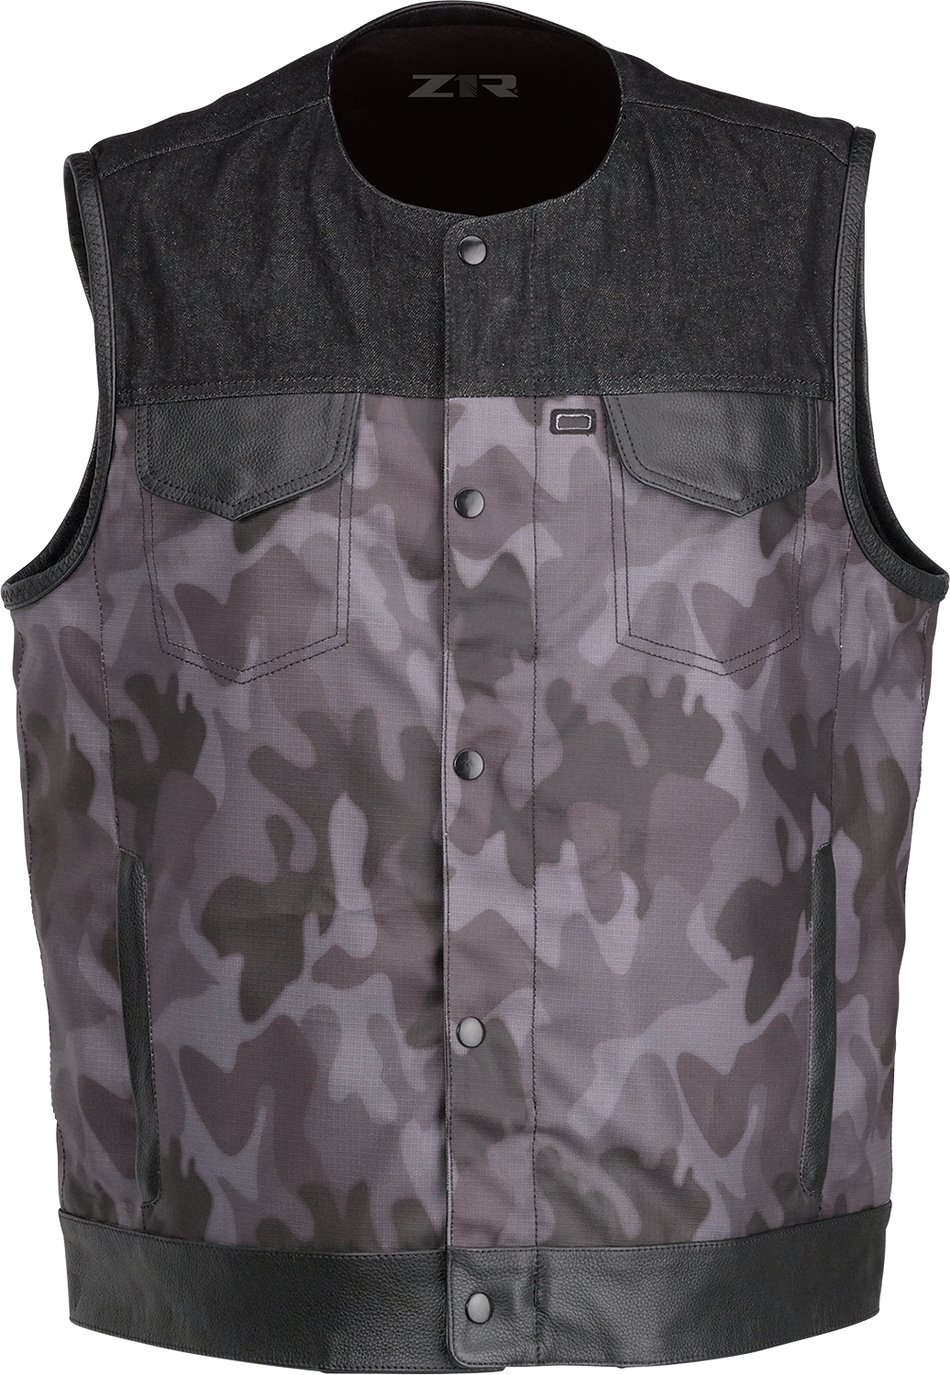 Z1R Nightfire Camo Vest - Black/Gray - 3XL 2830-0629